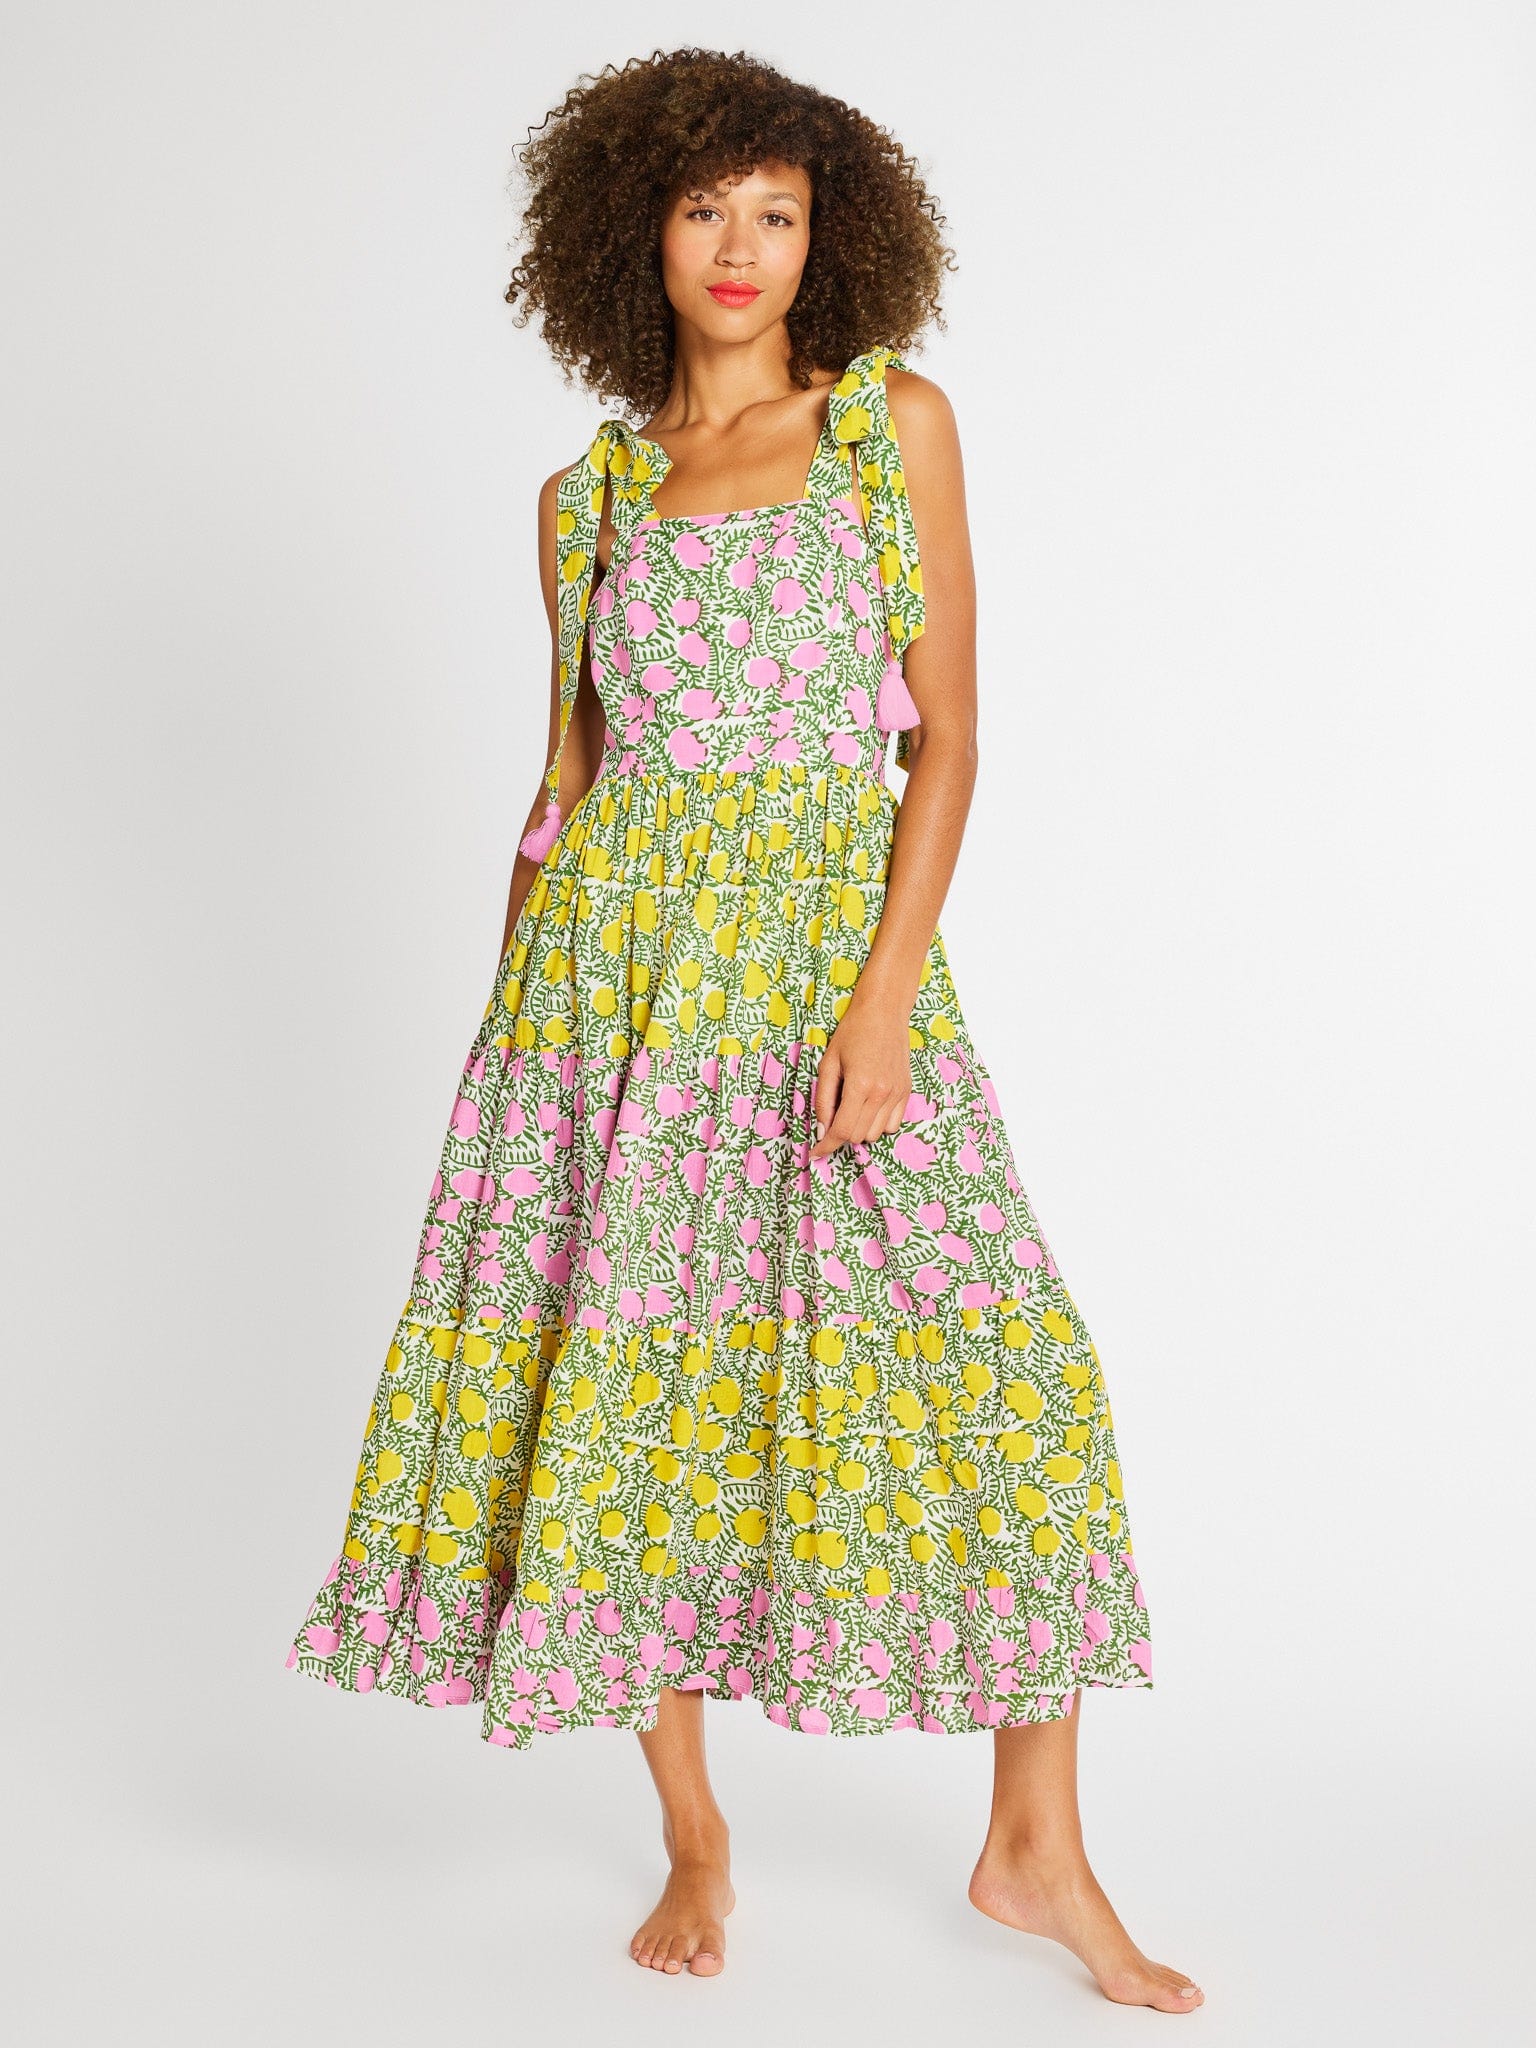 MILLE Clothing Daphne Dress in Patchwork Lemonade